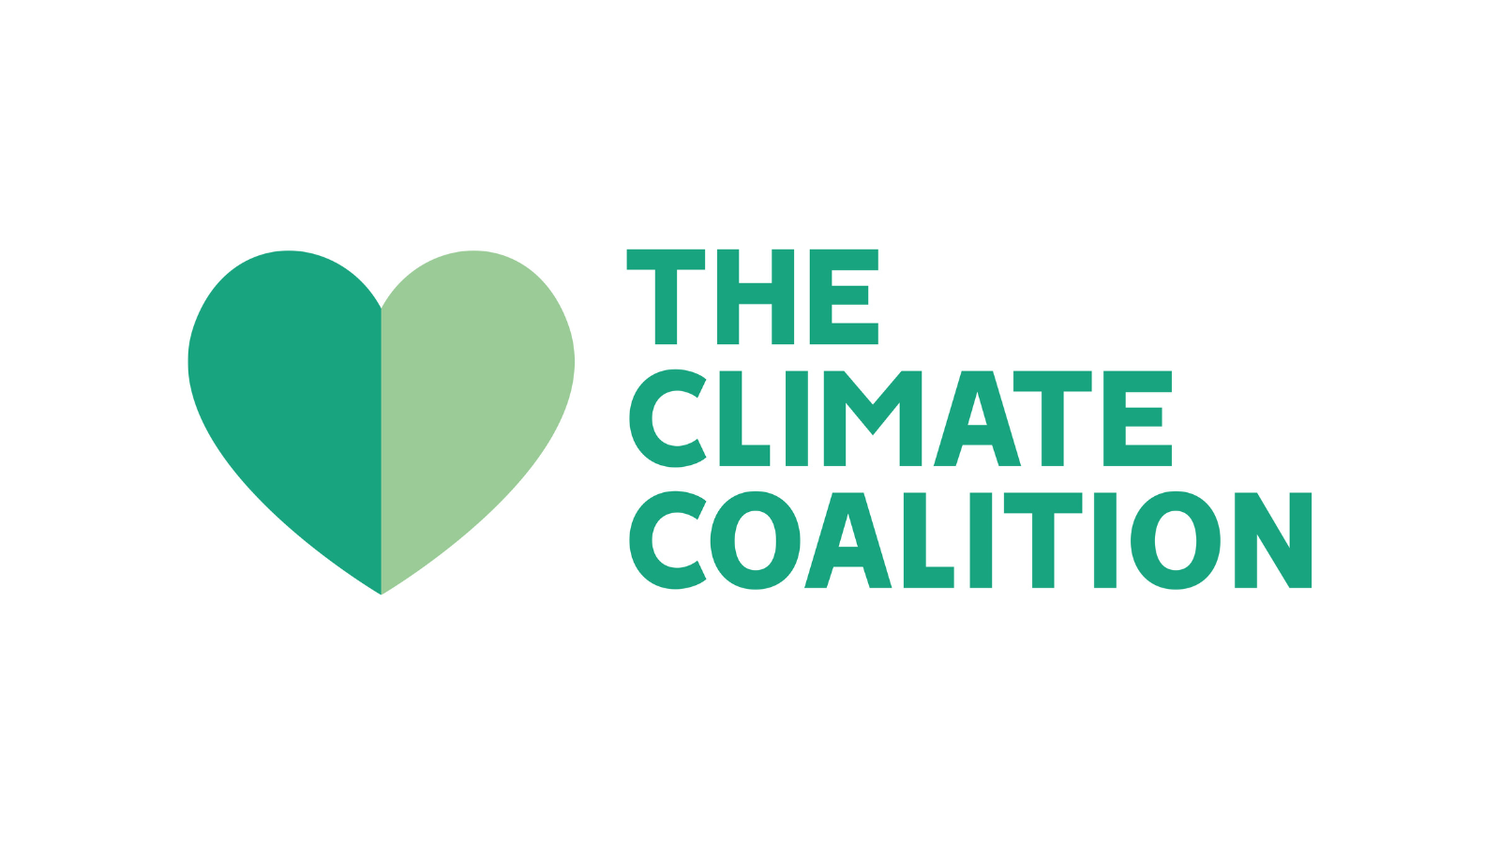 The Climate Coalition logo